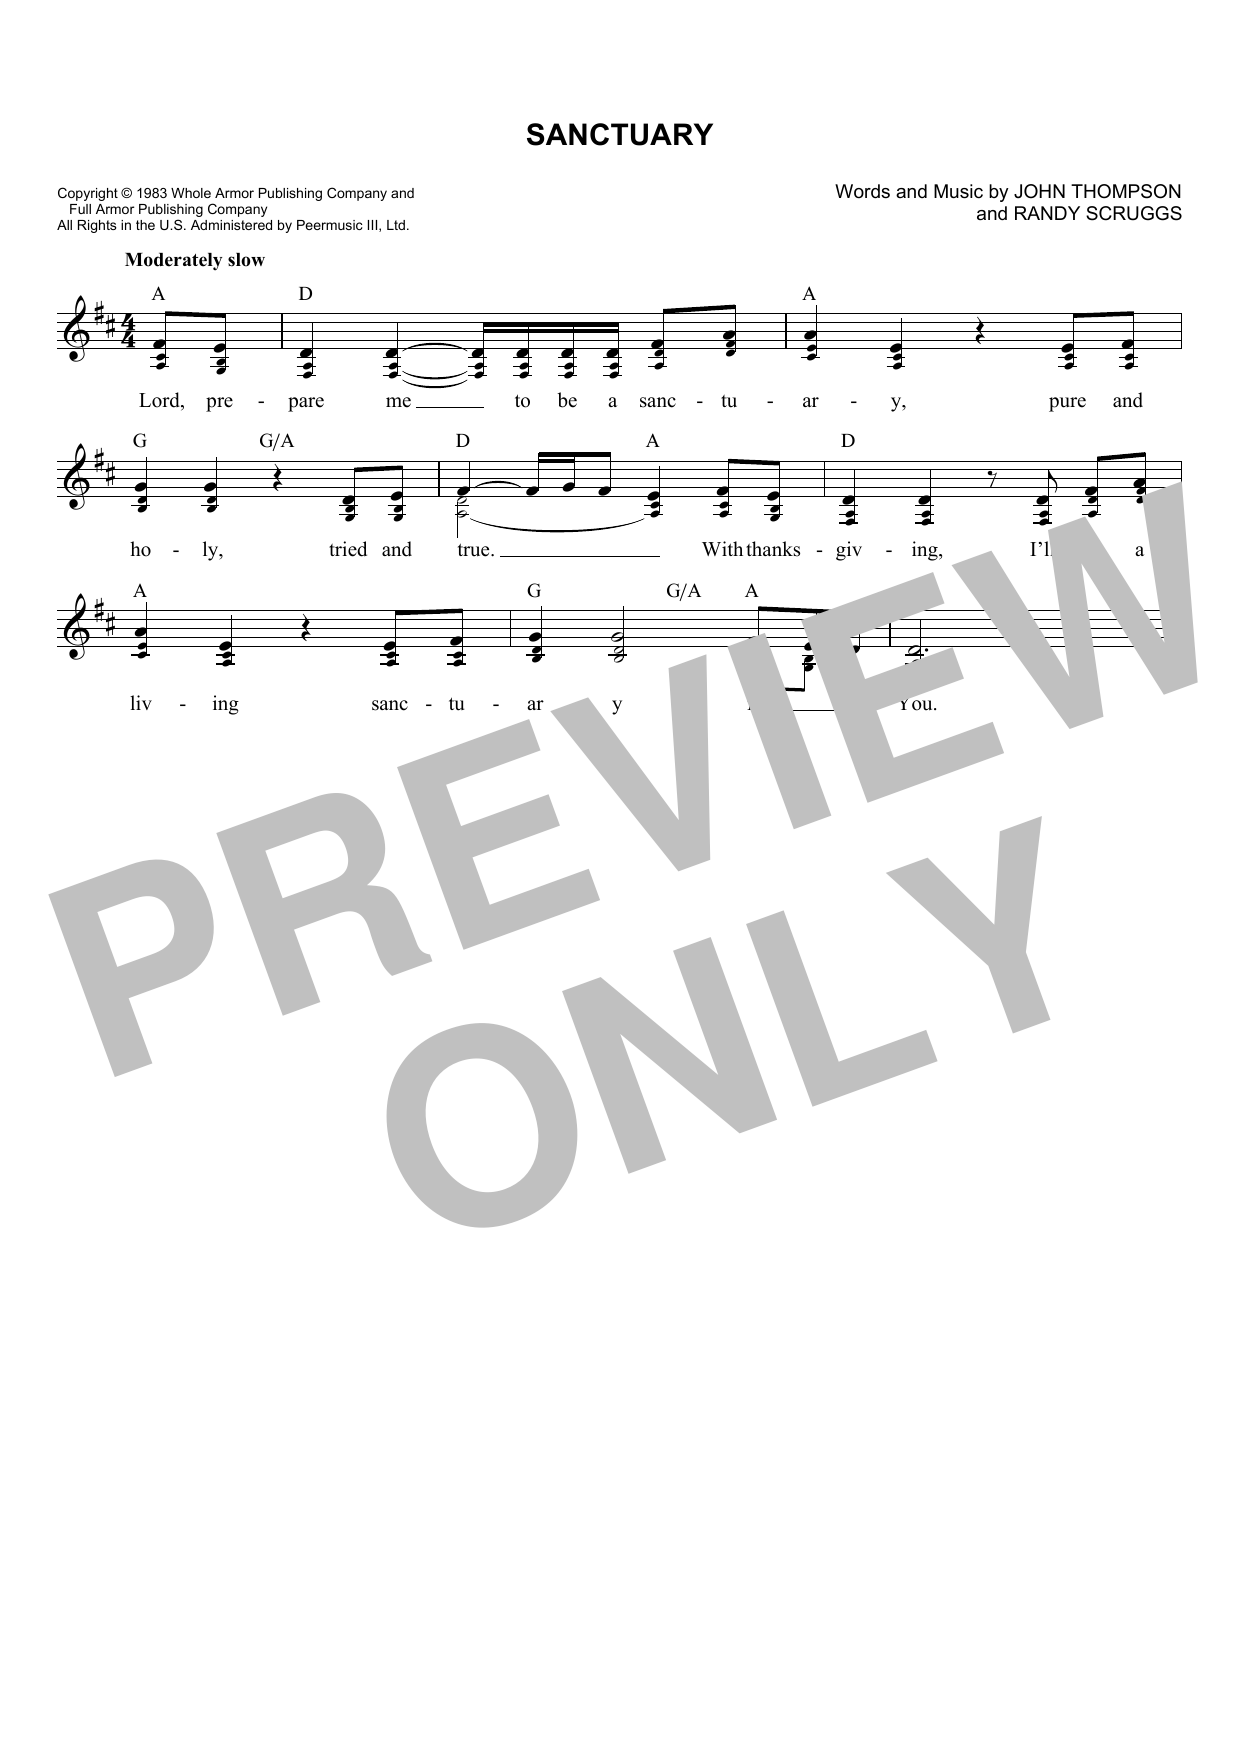 John Thompson Sanctuary Sheet Music Notes & Chords for Melody Line, Lyrics & Chords - Download or Print PDF